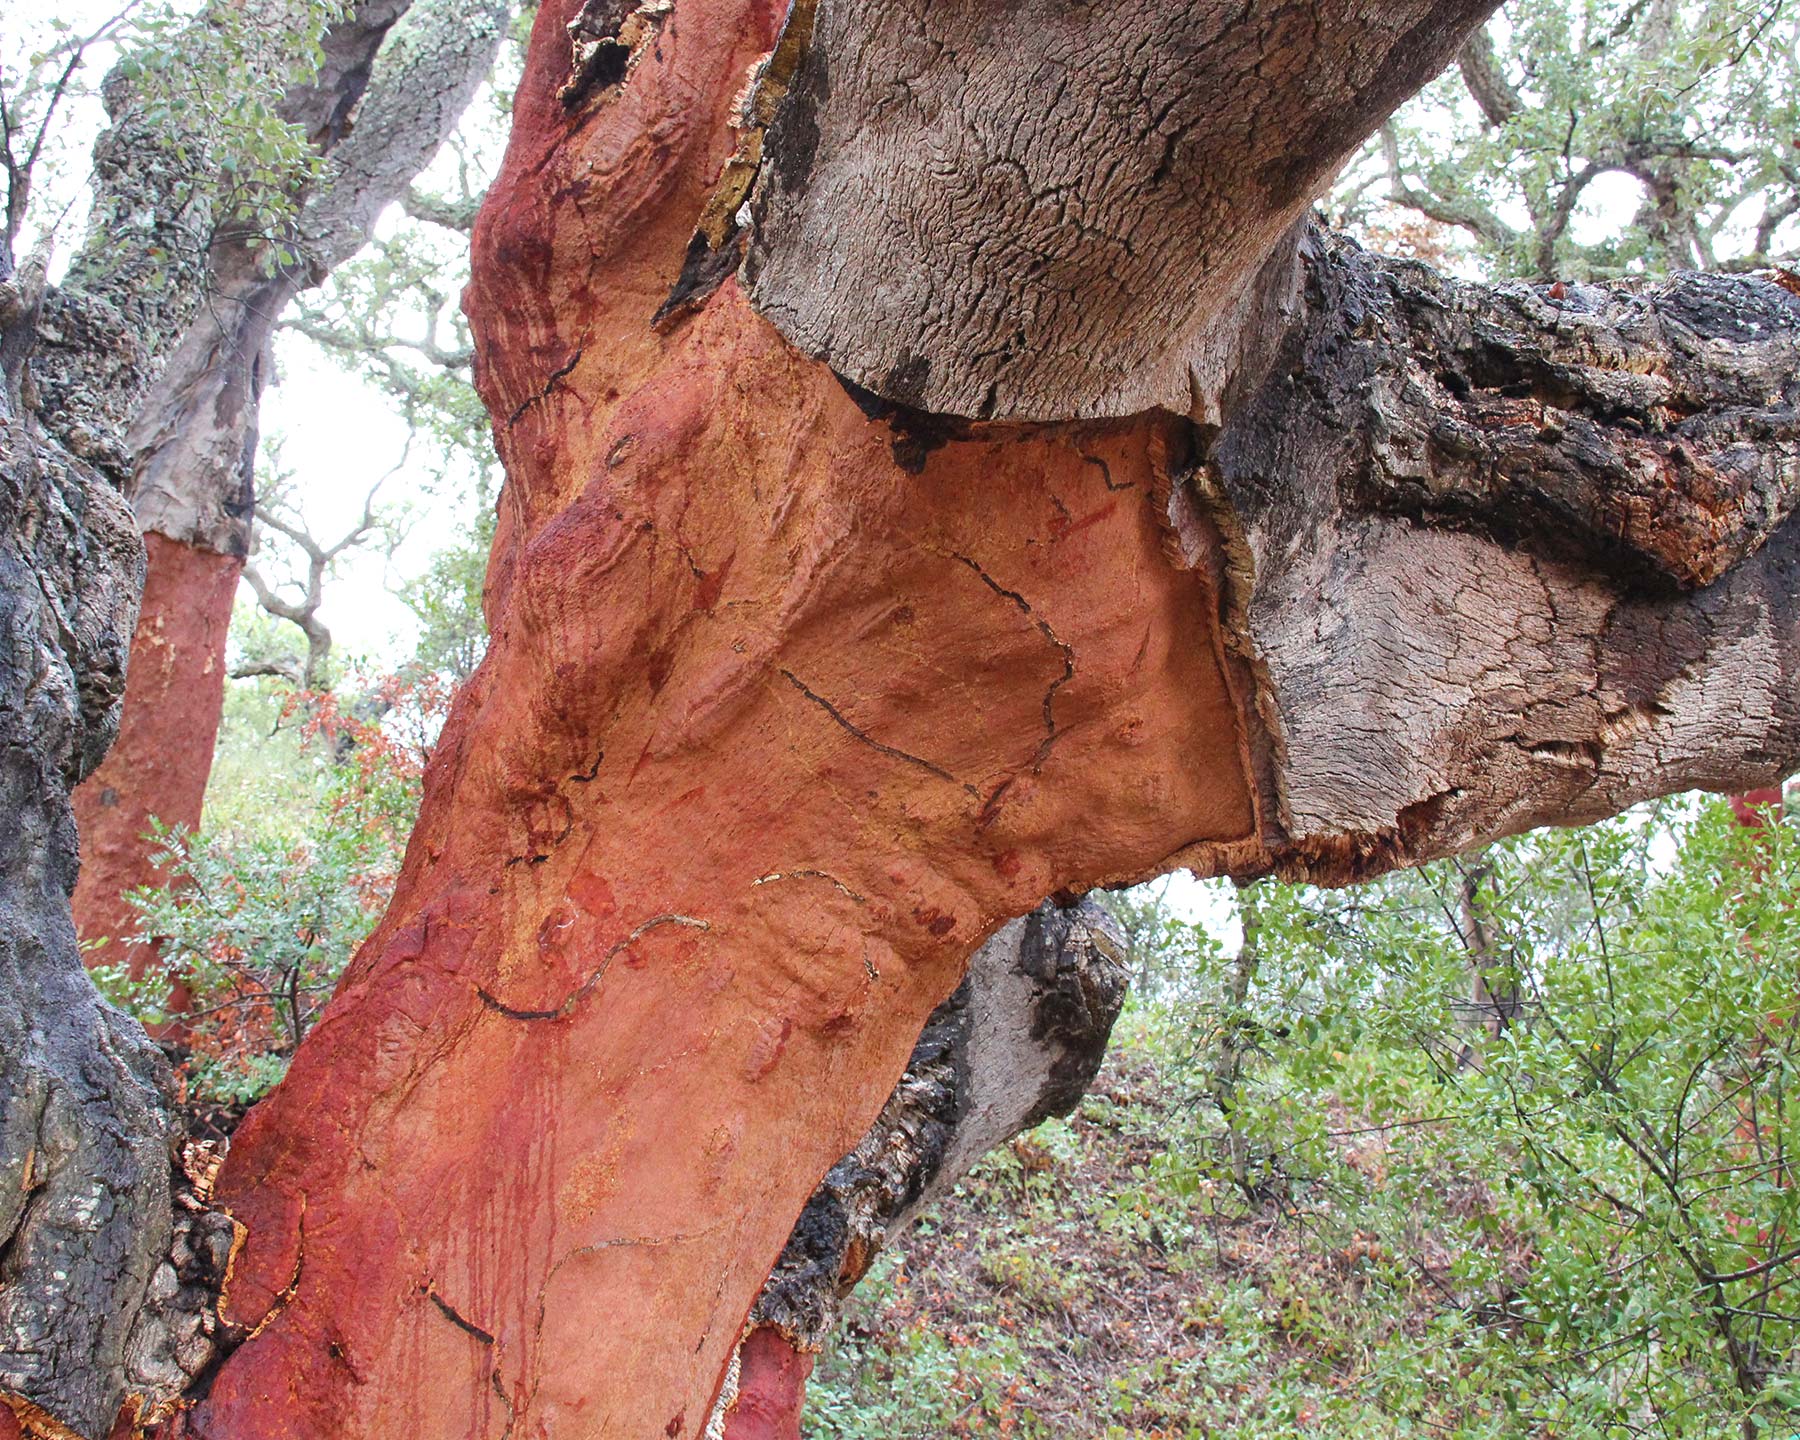 Quercus suber - the Cork Oak